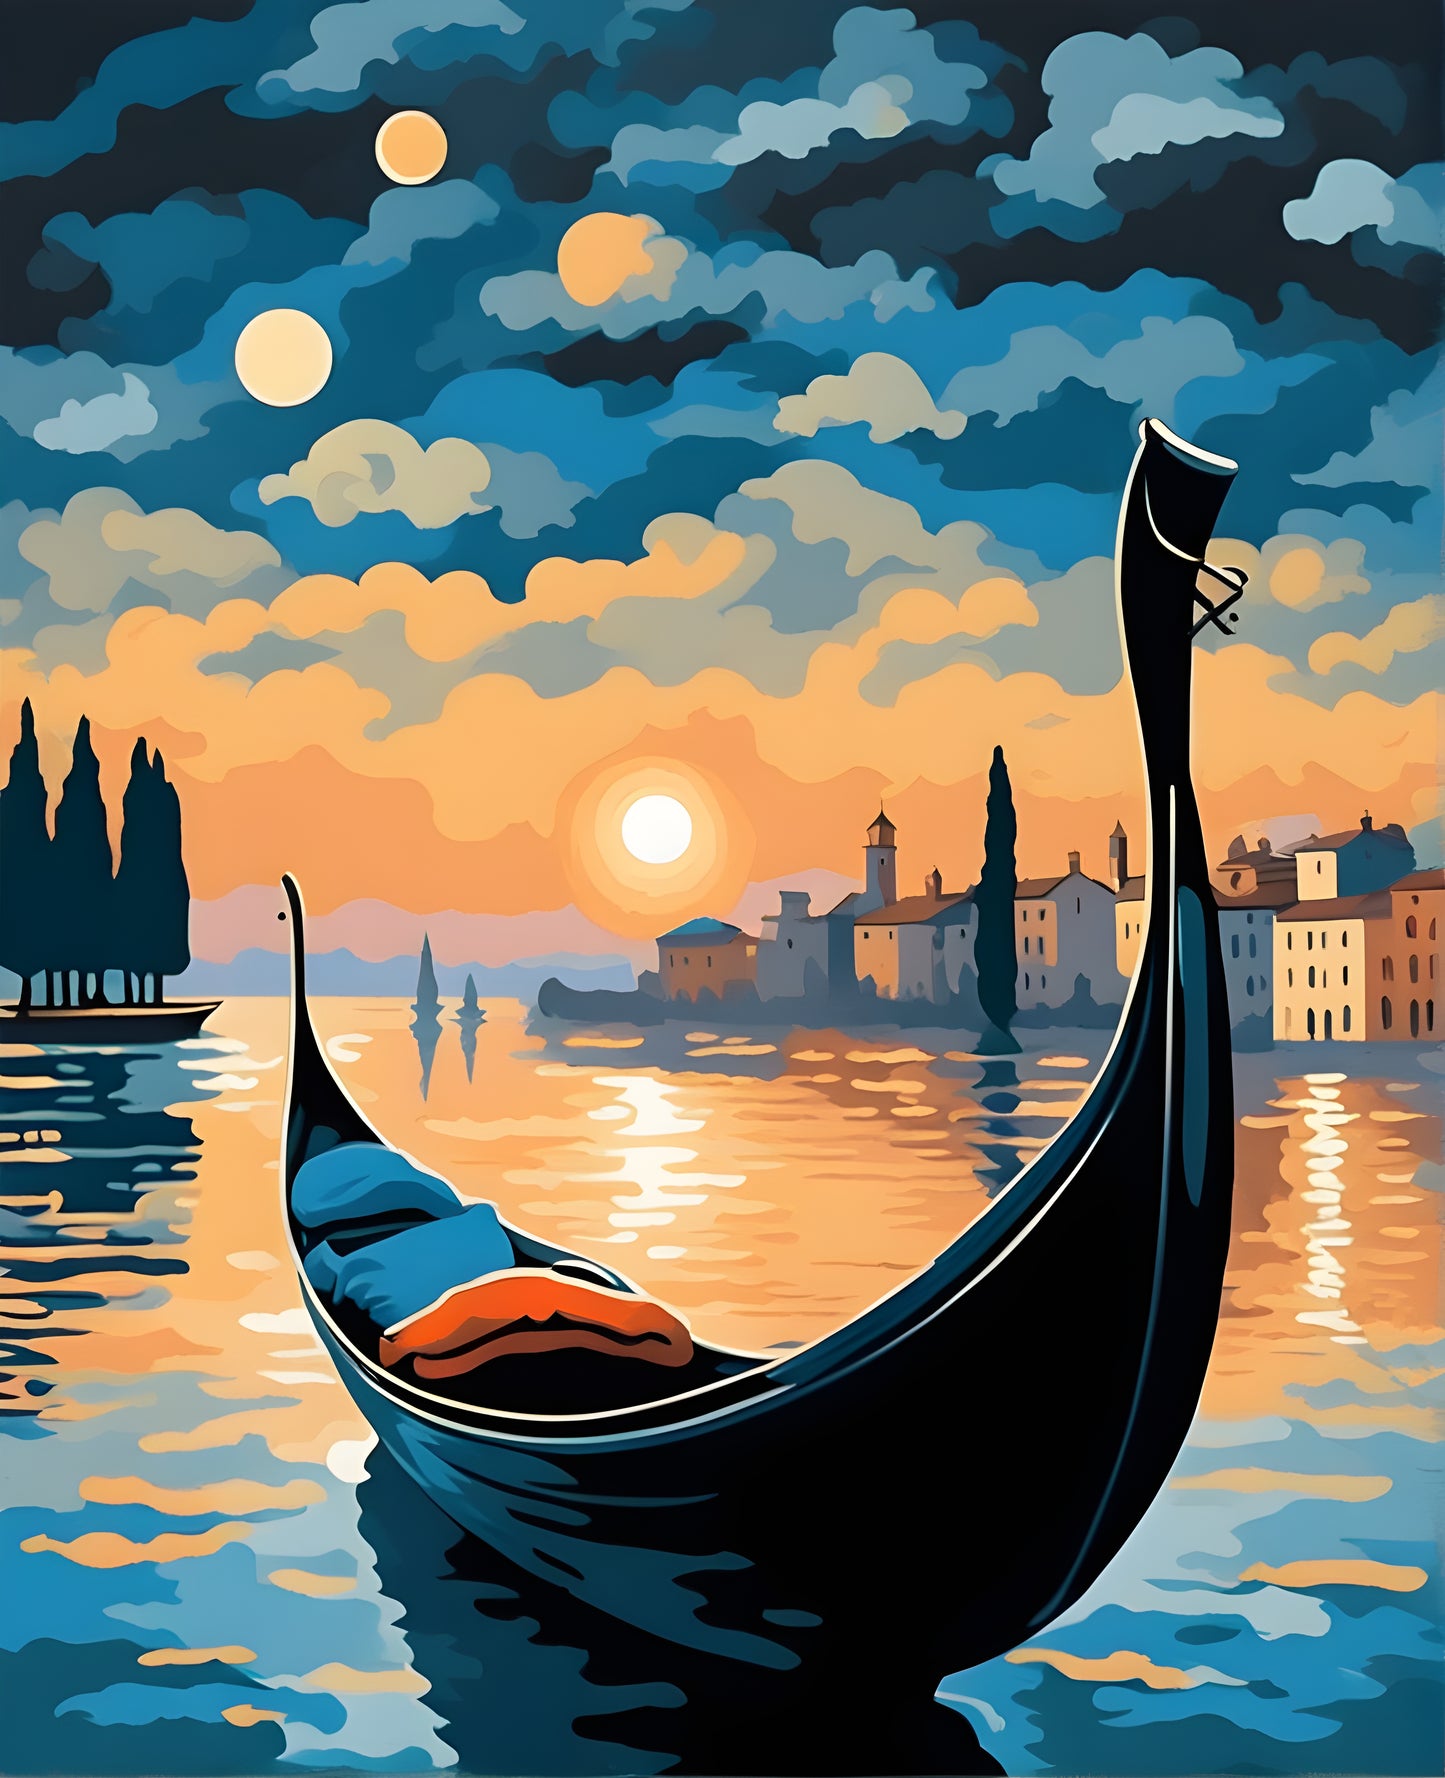 Gondola Night (2) - Van-Go Paint-By-Number Kit